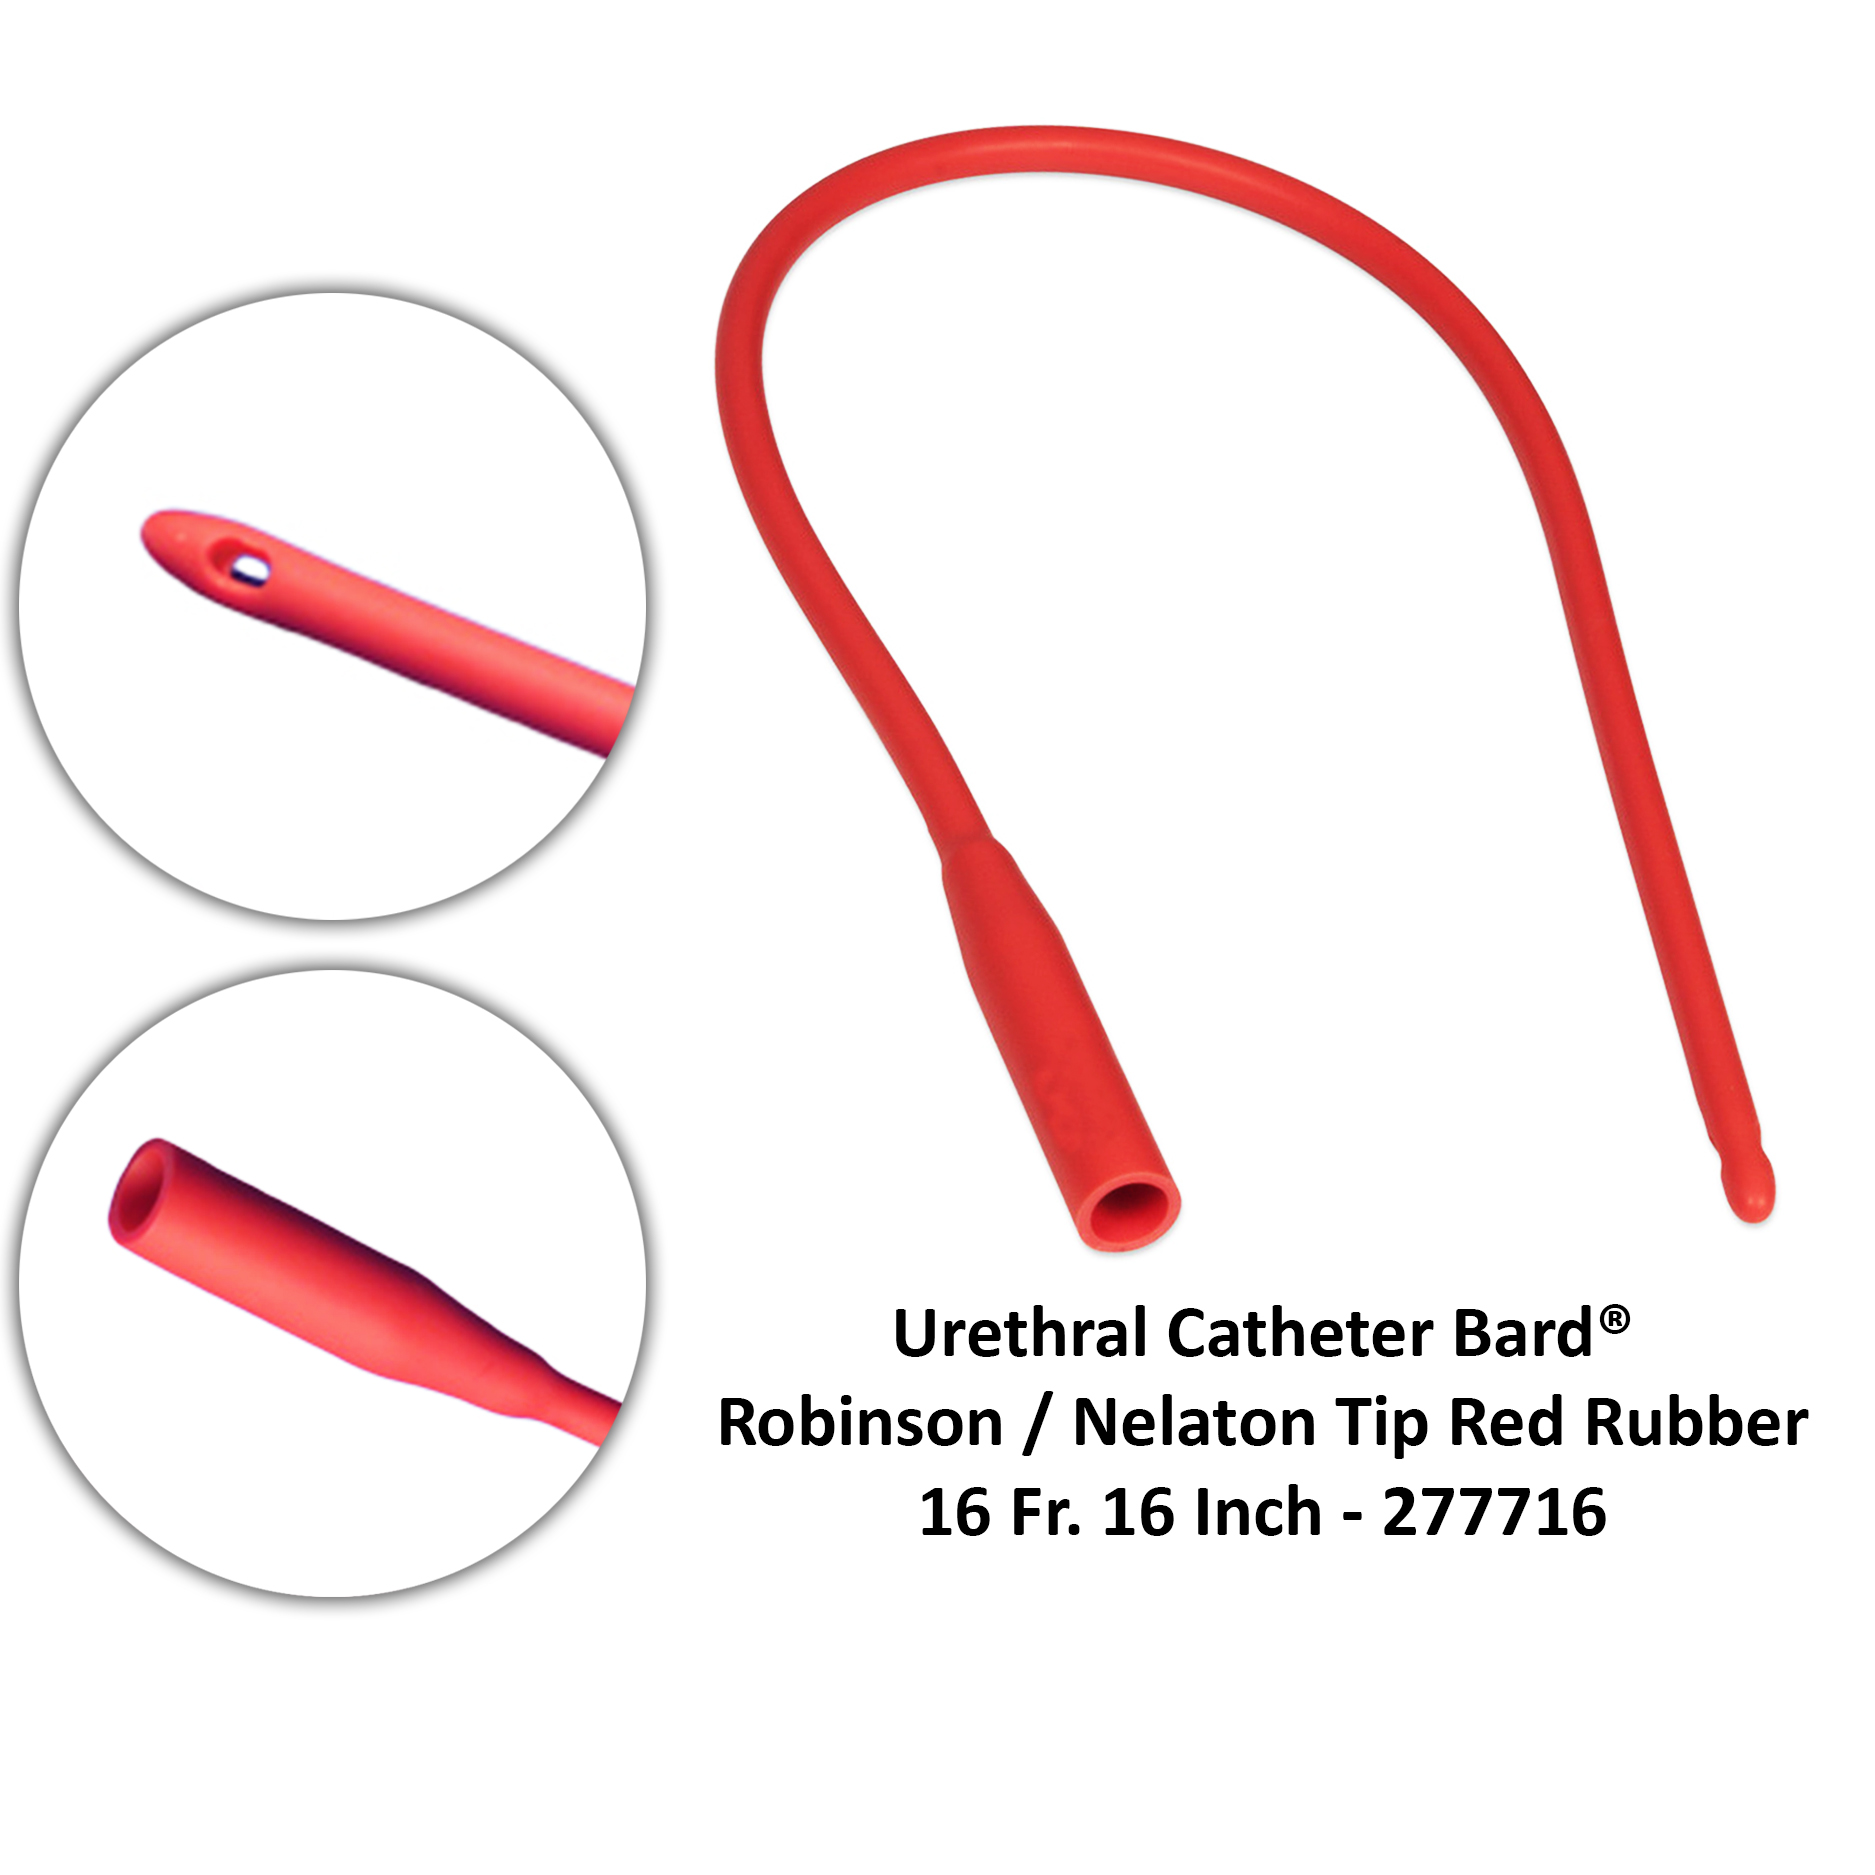 Urethral Catheter Bard® Robinson / Nelaton Tip Red Rubber 16 Fr. 16 Inch - 277716